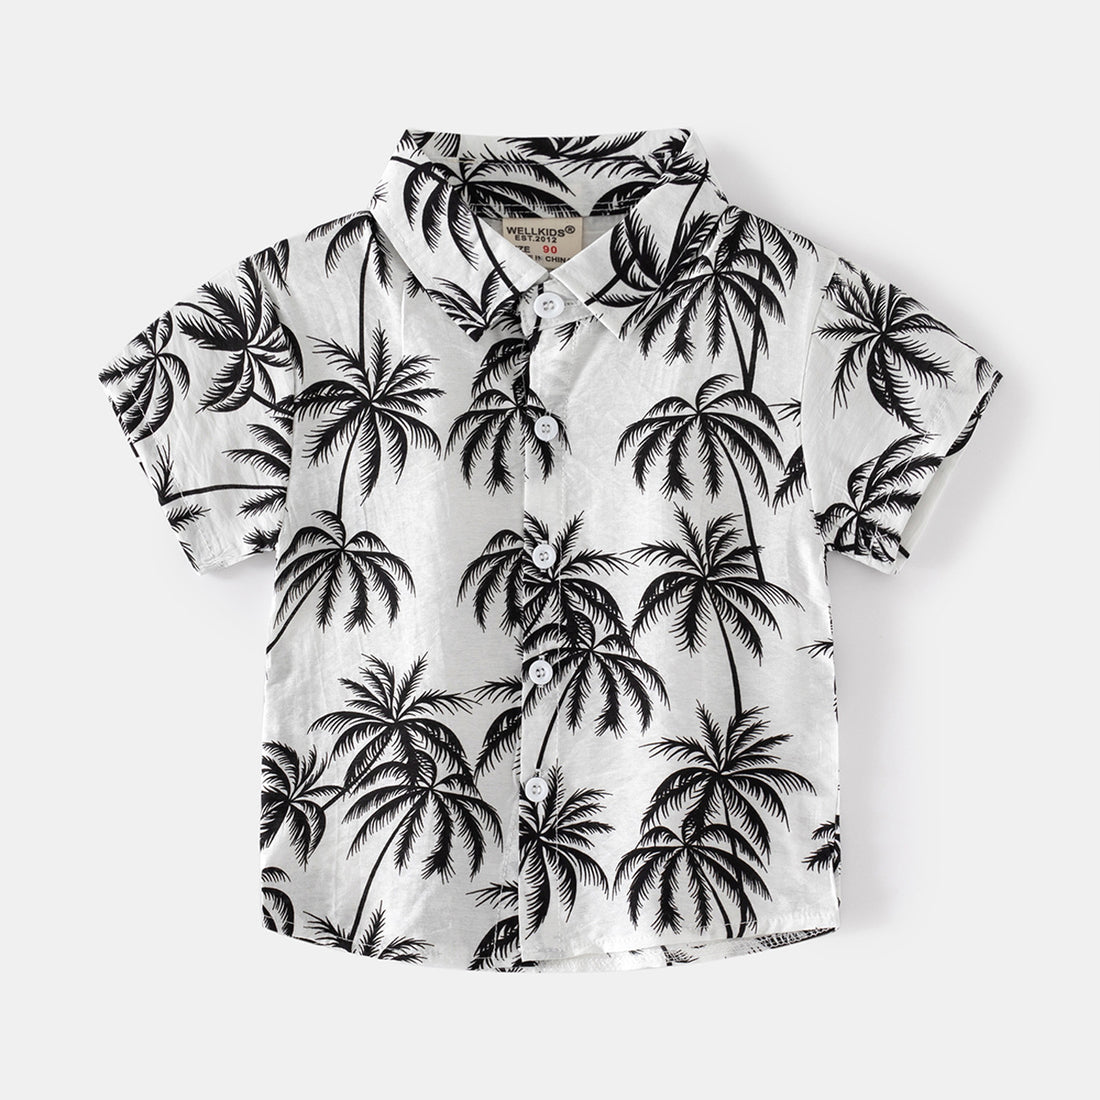 [5131017] - Baju Atasan Kemeja Hawai Fashion Import Anak Laki-Laki - Motif Coconut Tree